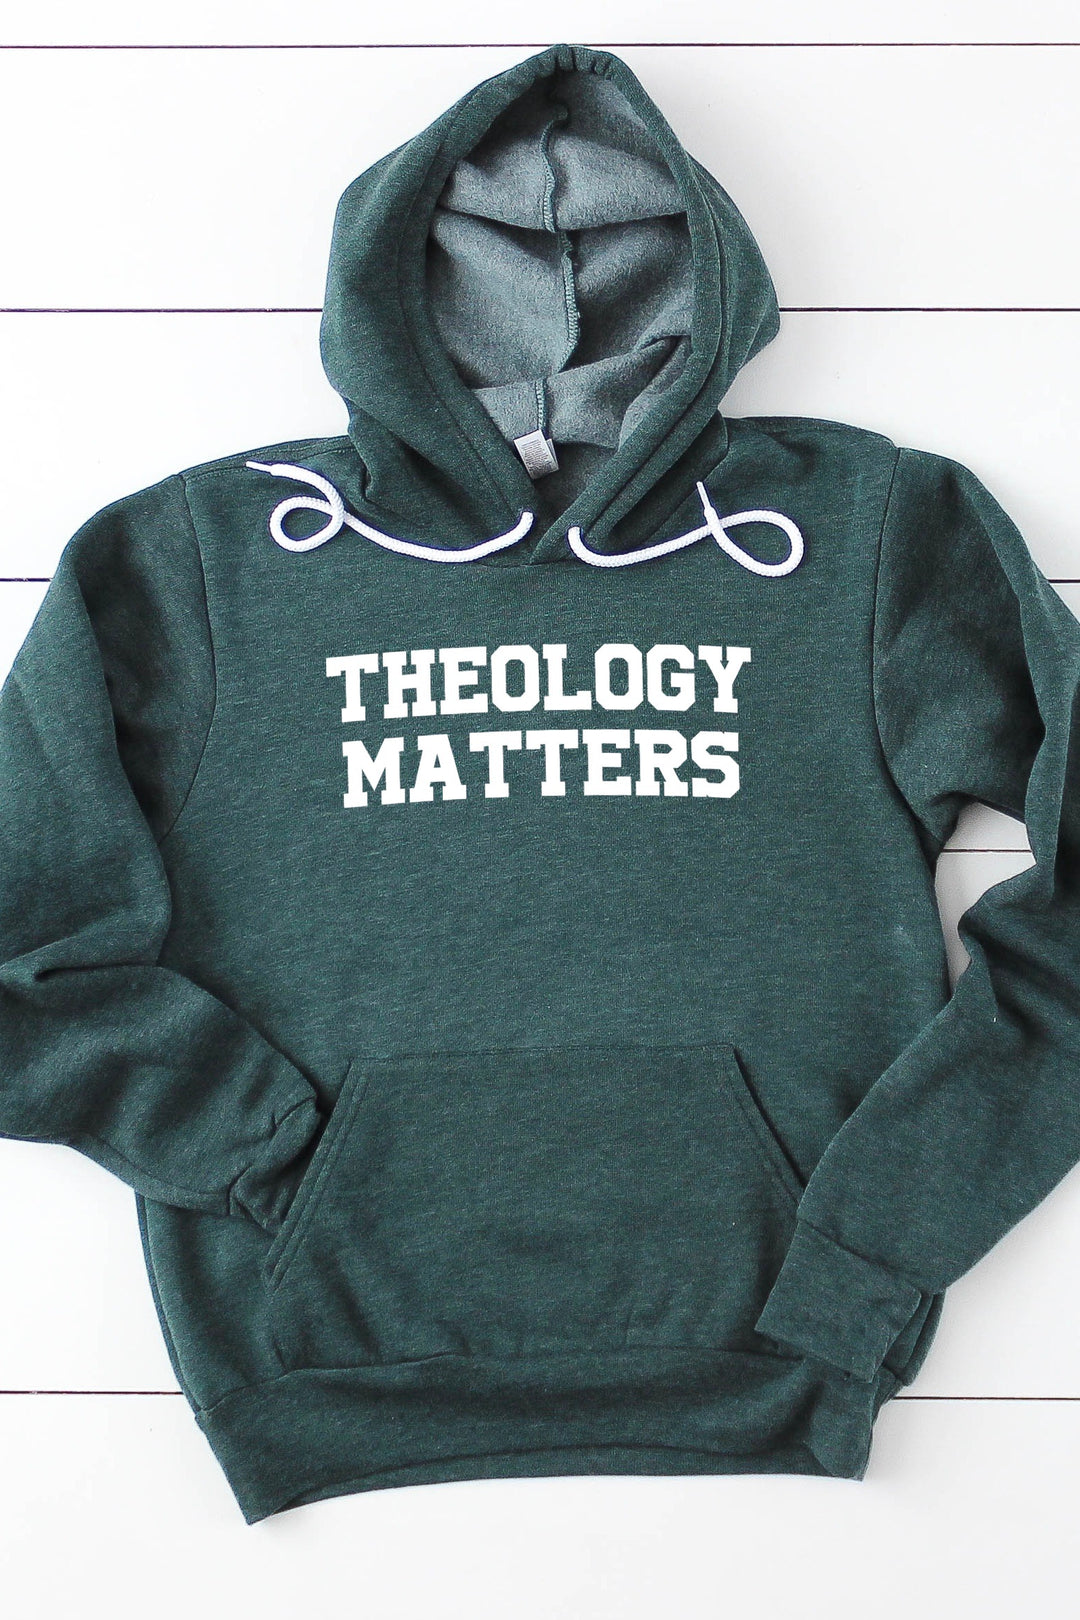 Theology Matters Hoodie